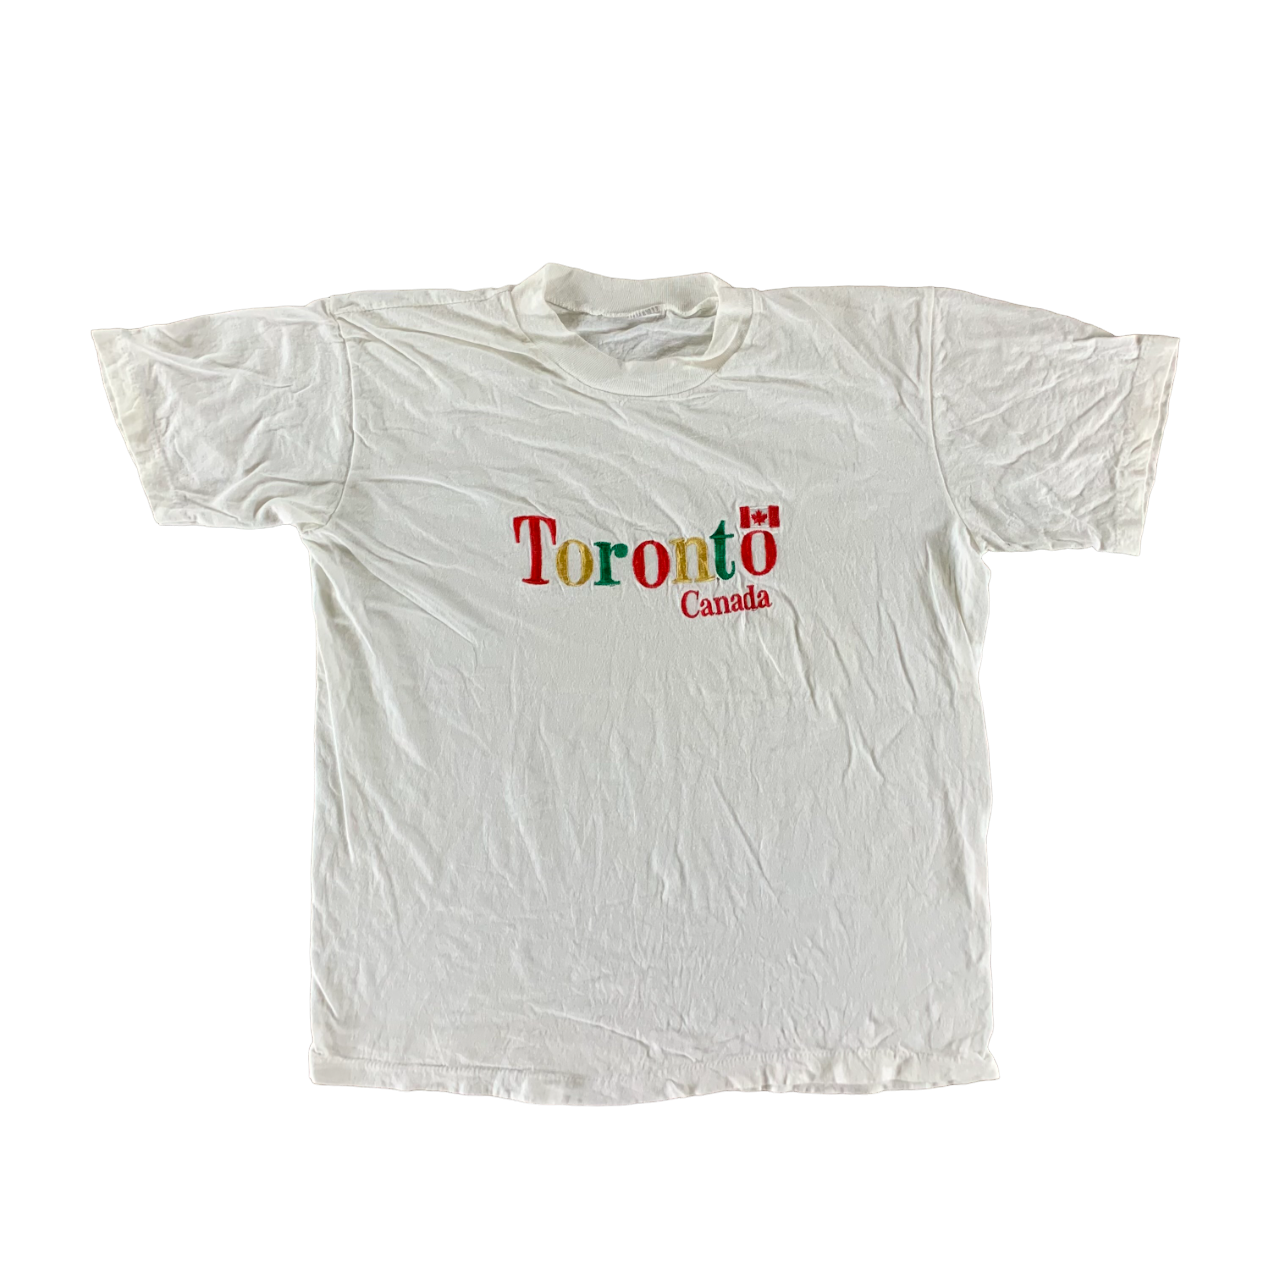 Vintage 1990s Toronto Canada T-shirt size Large